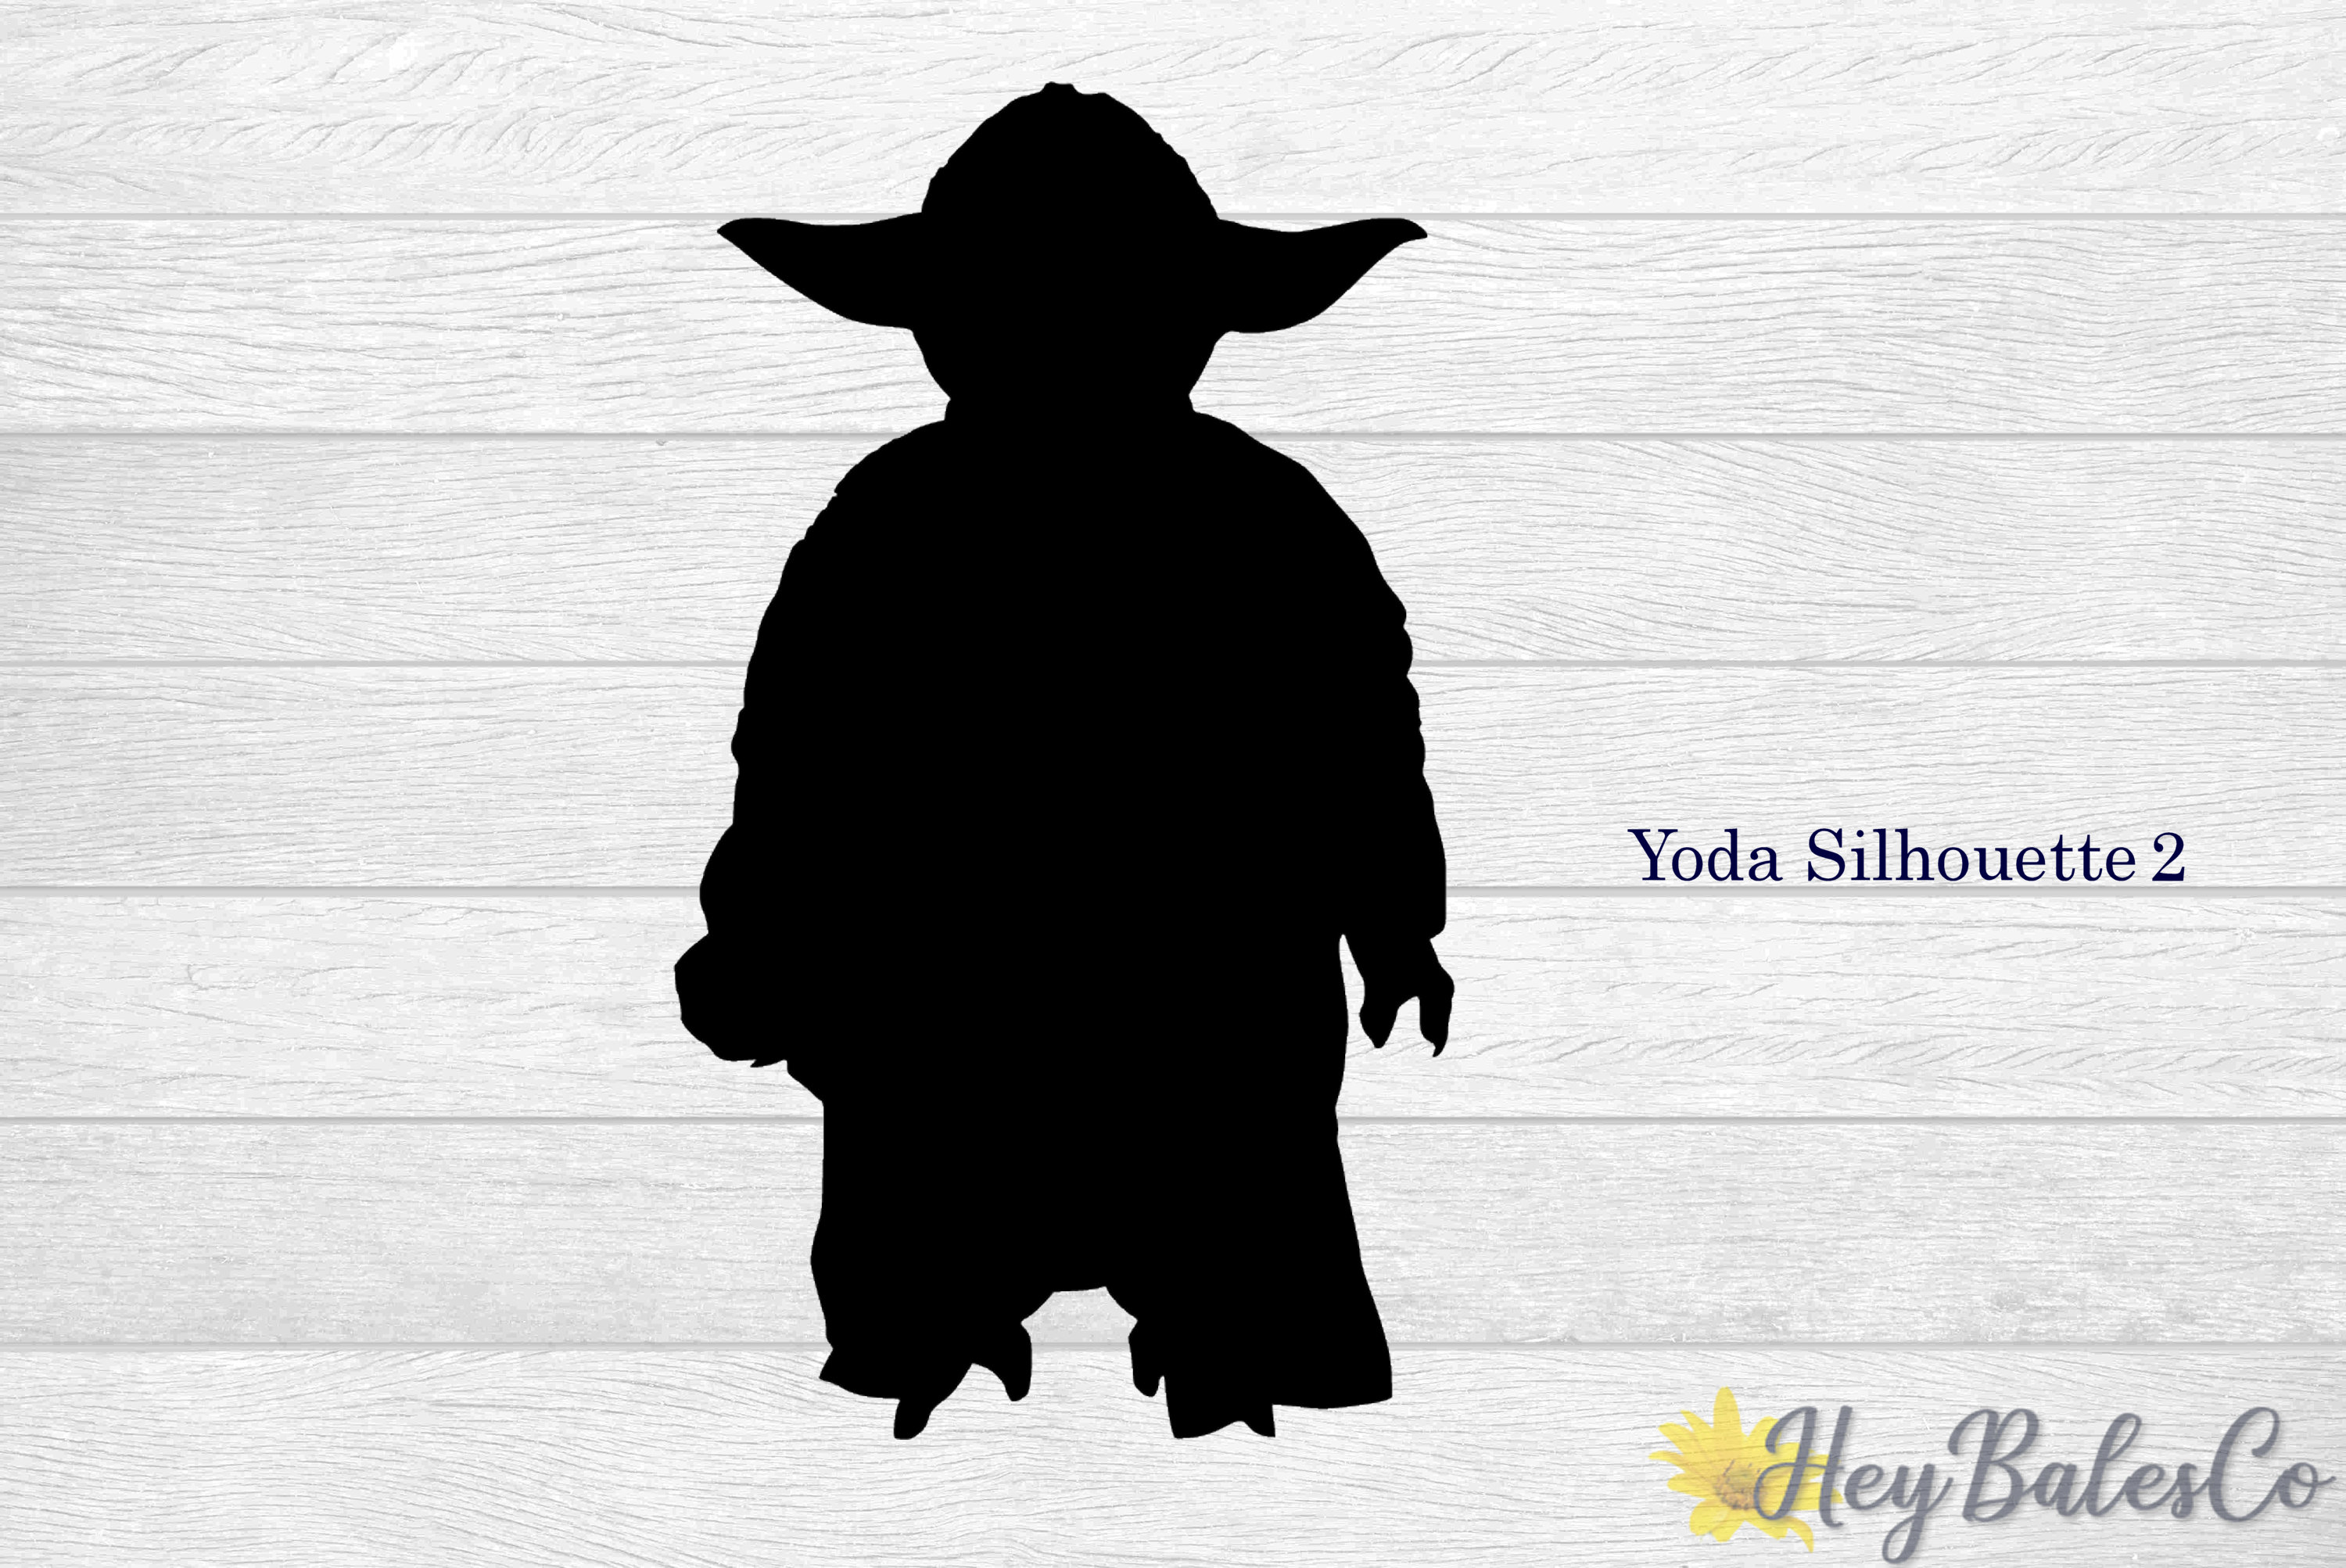 Star Wars Yoda Silhouette Vinyl Decals Disney Characters | Etsy